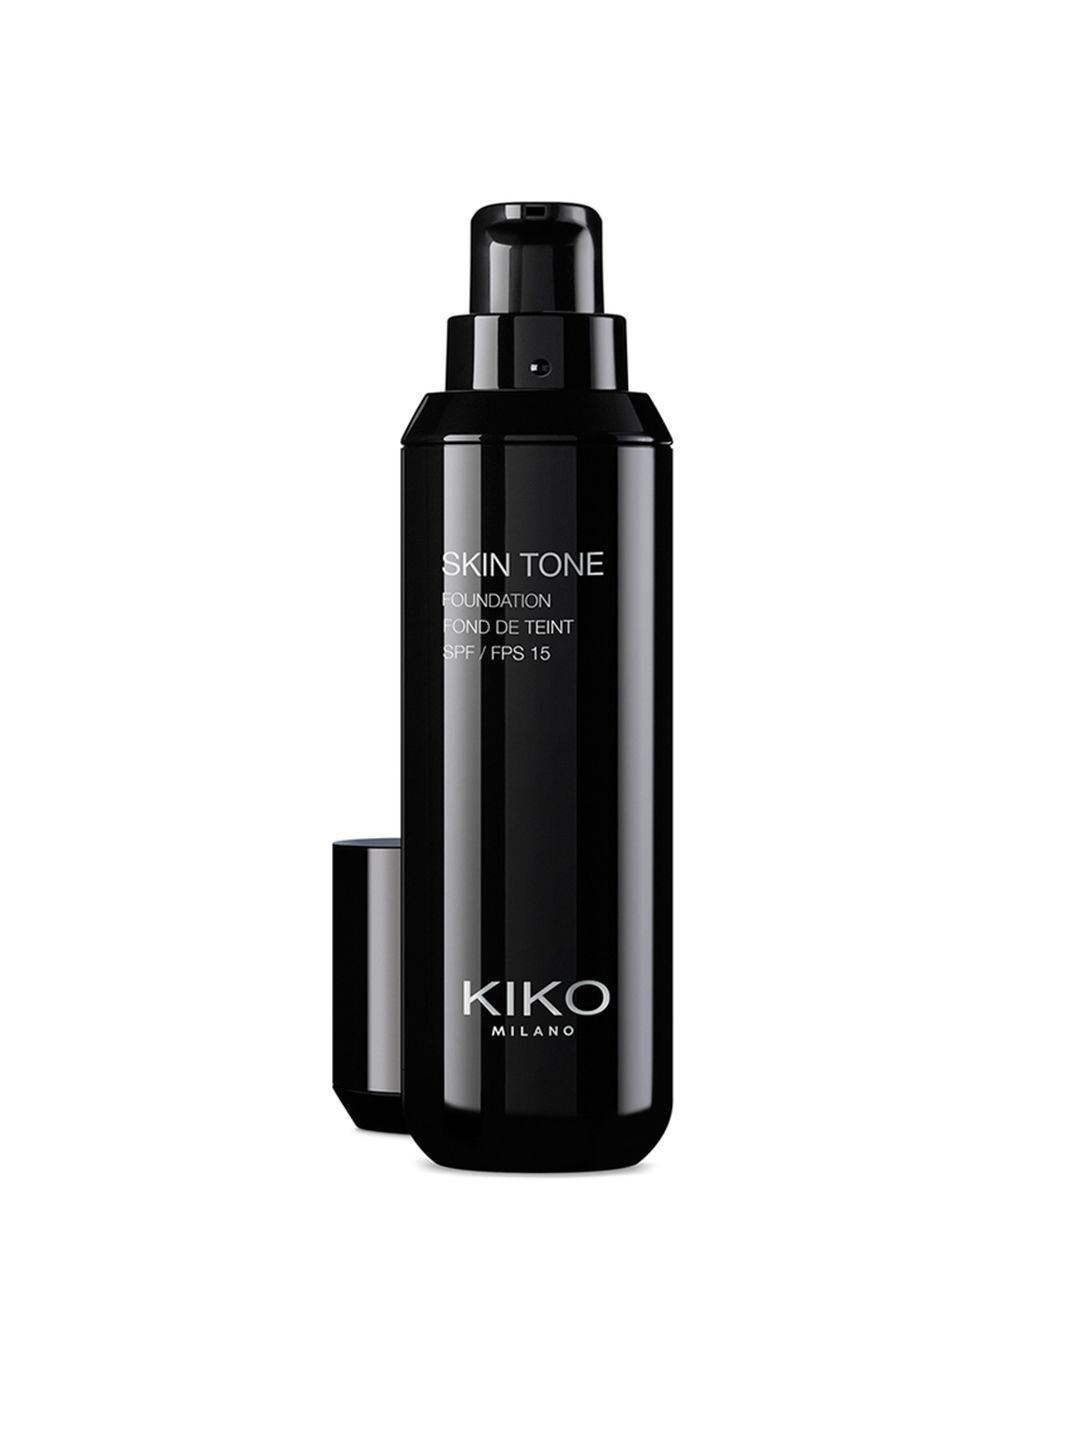 KIKO MILANO Skin Tone Foundation with SPF 15 - Warm Beige 10 Price in India